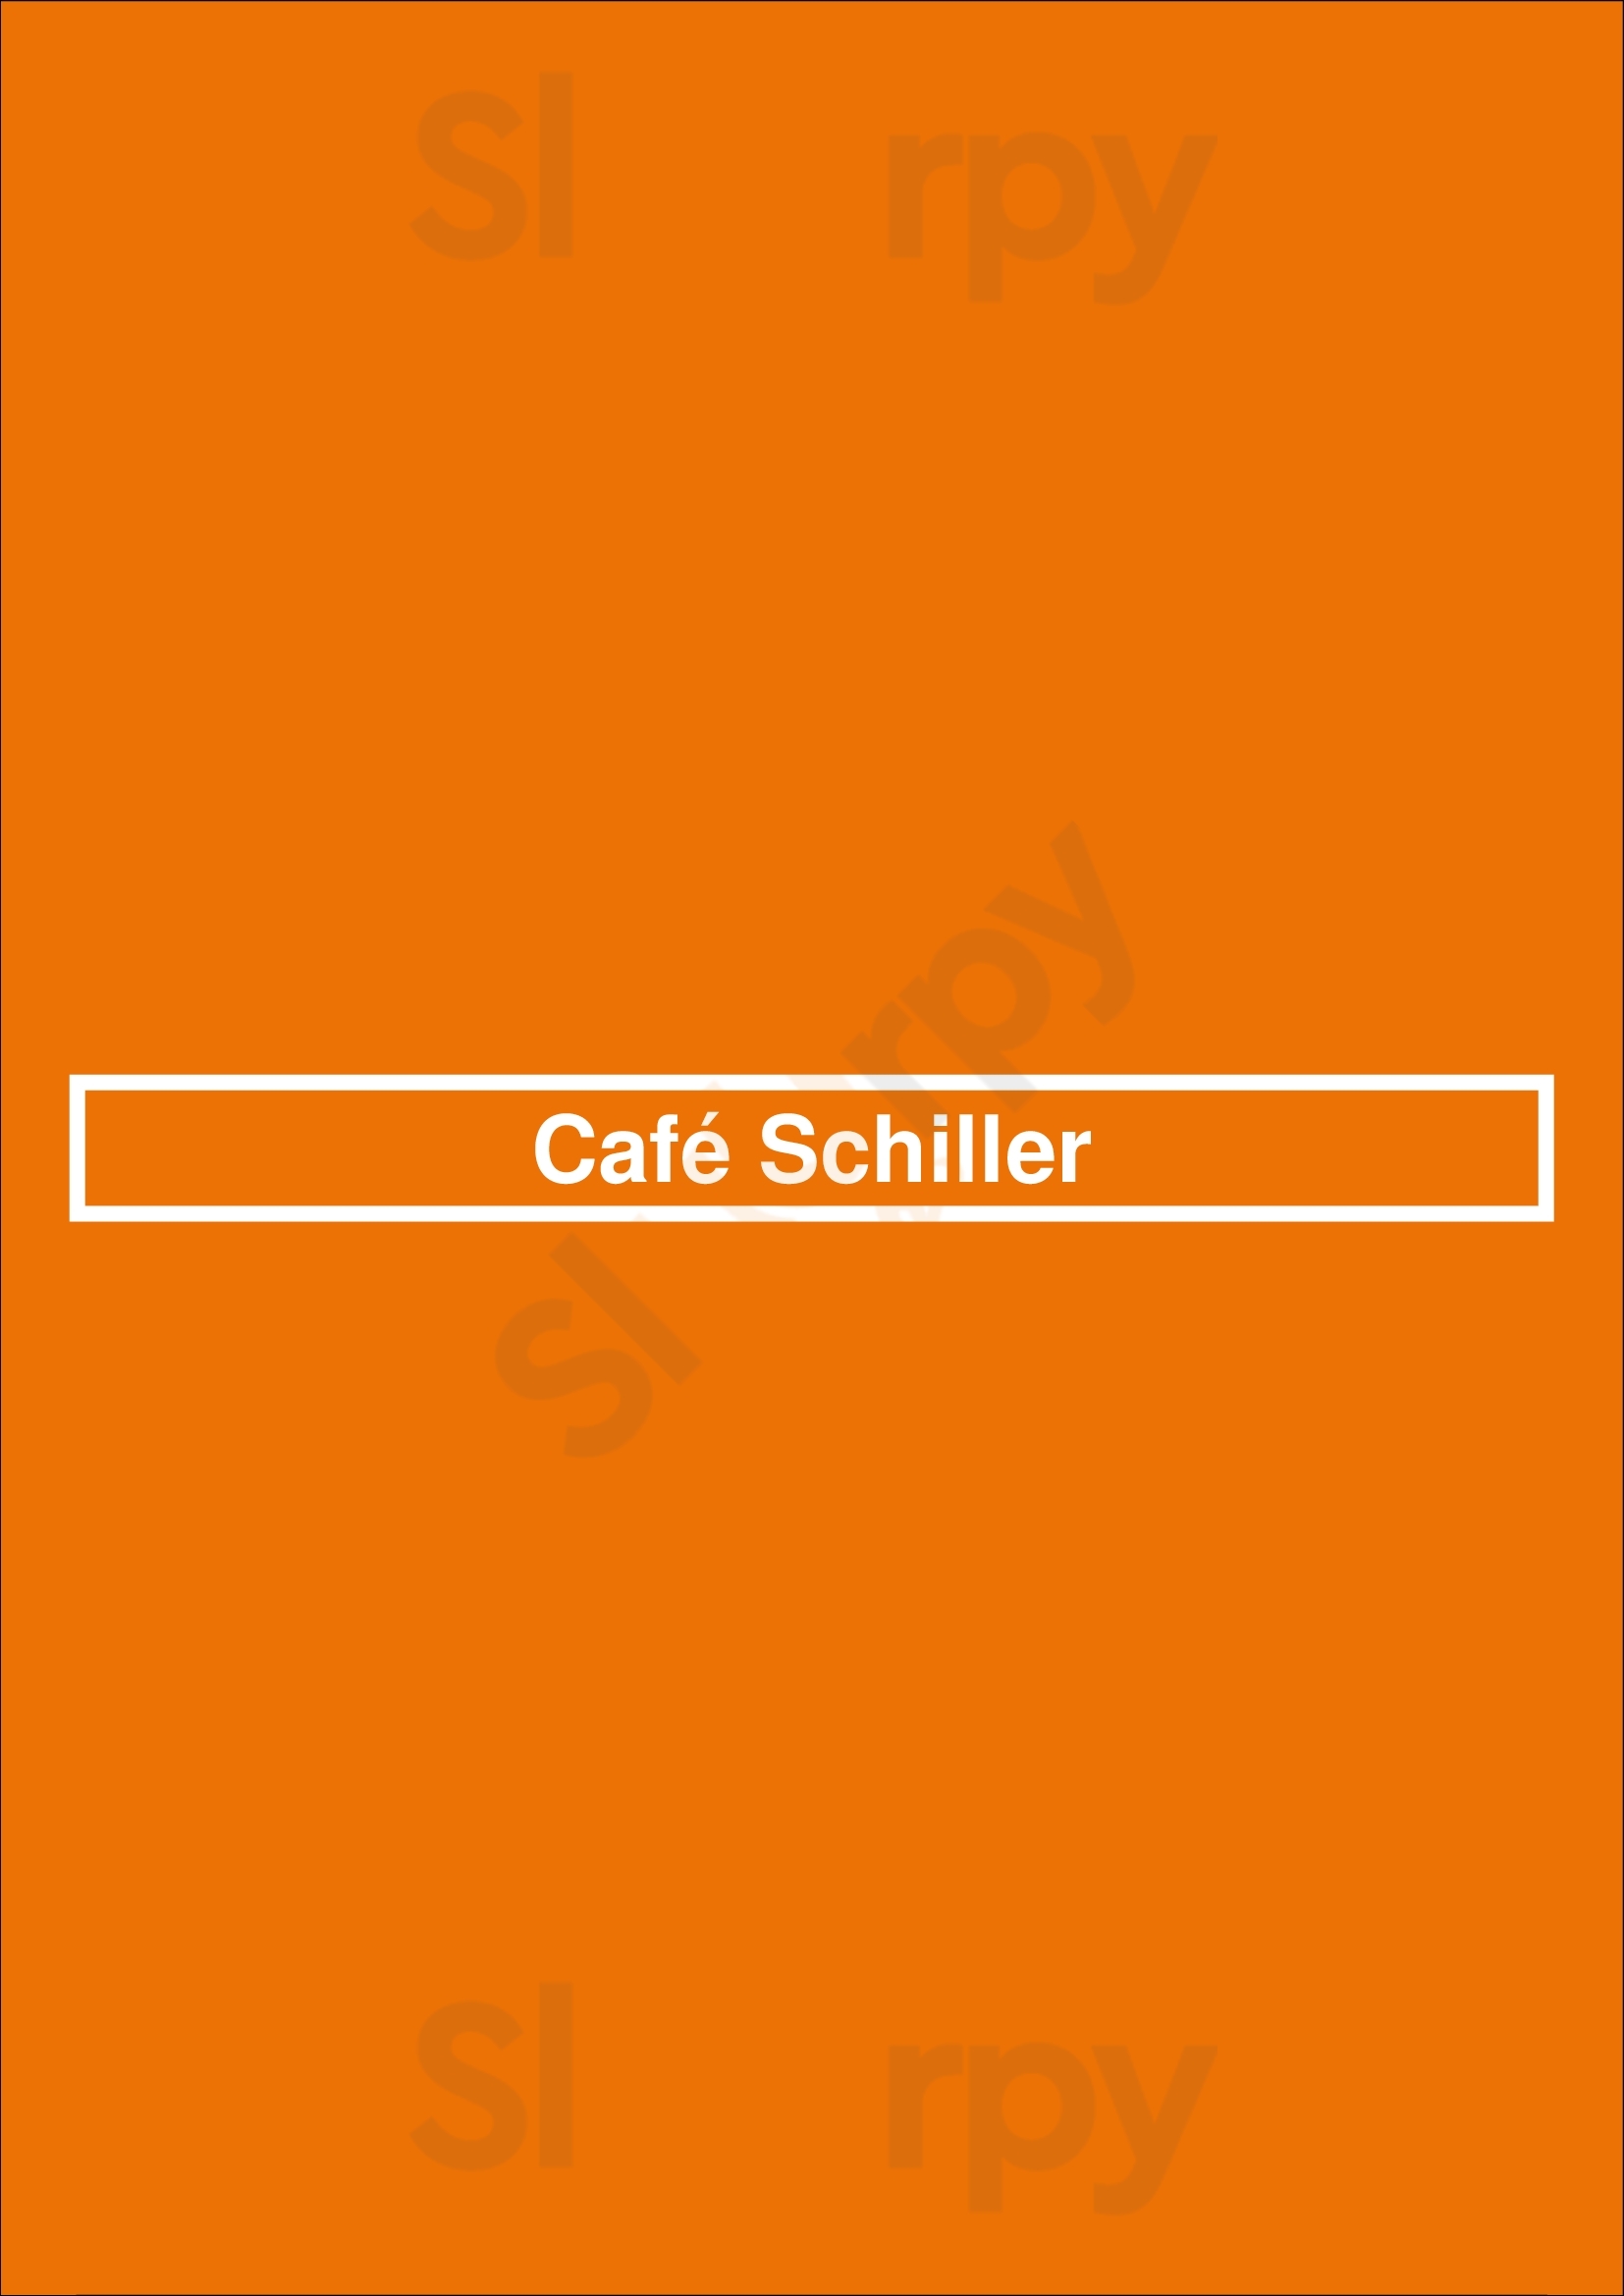 Café Schiller Amsterdam Menu - 1